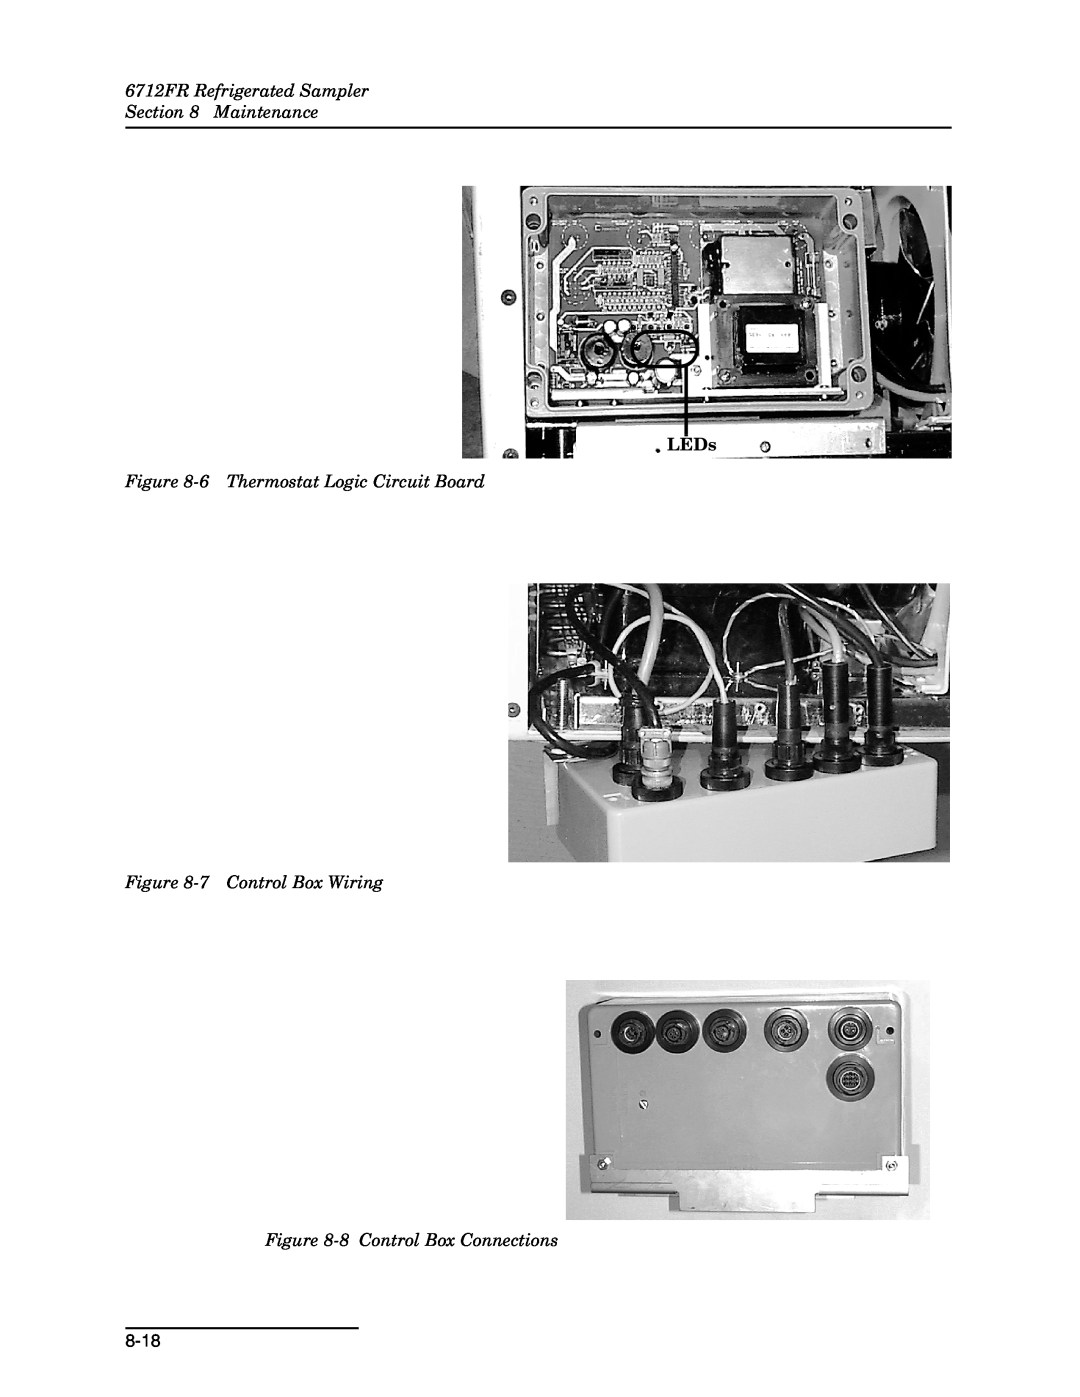 Teledyne manual 6712FR Refrigerated Sampler Maintenance, LEDs, 6 Thermostat Logic Circuit Board, 8-18 